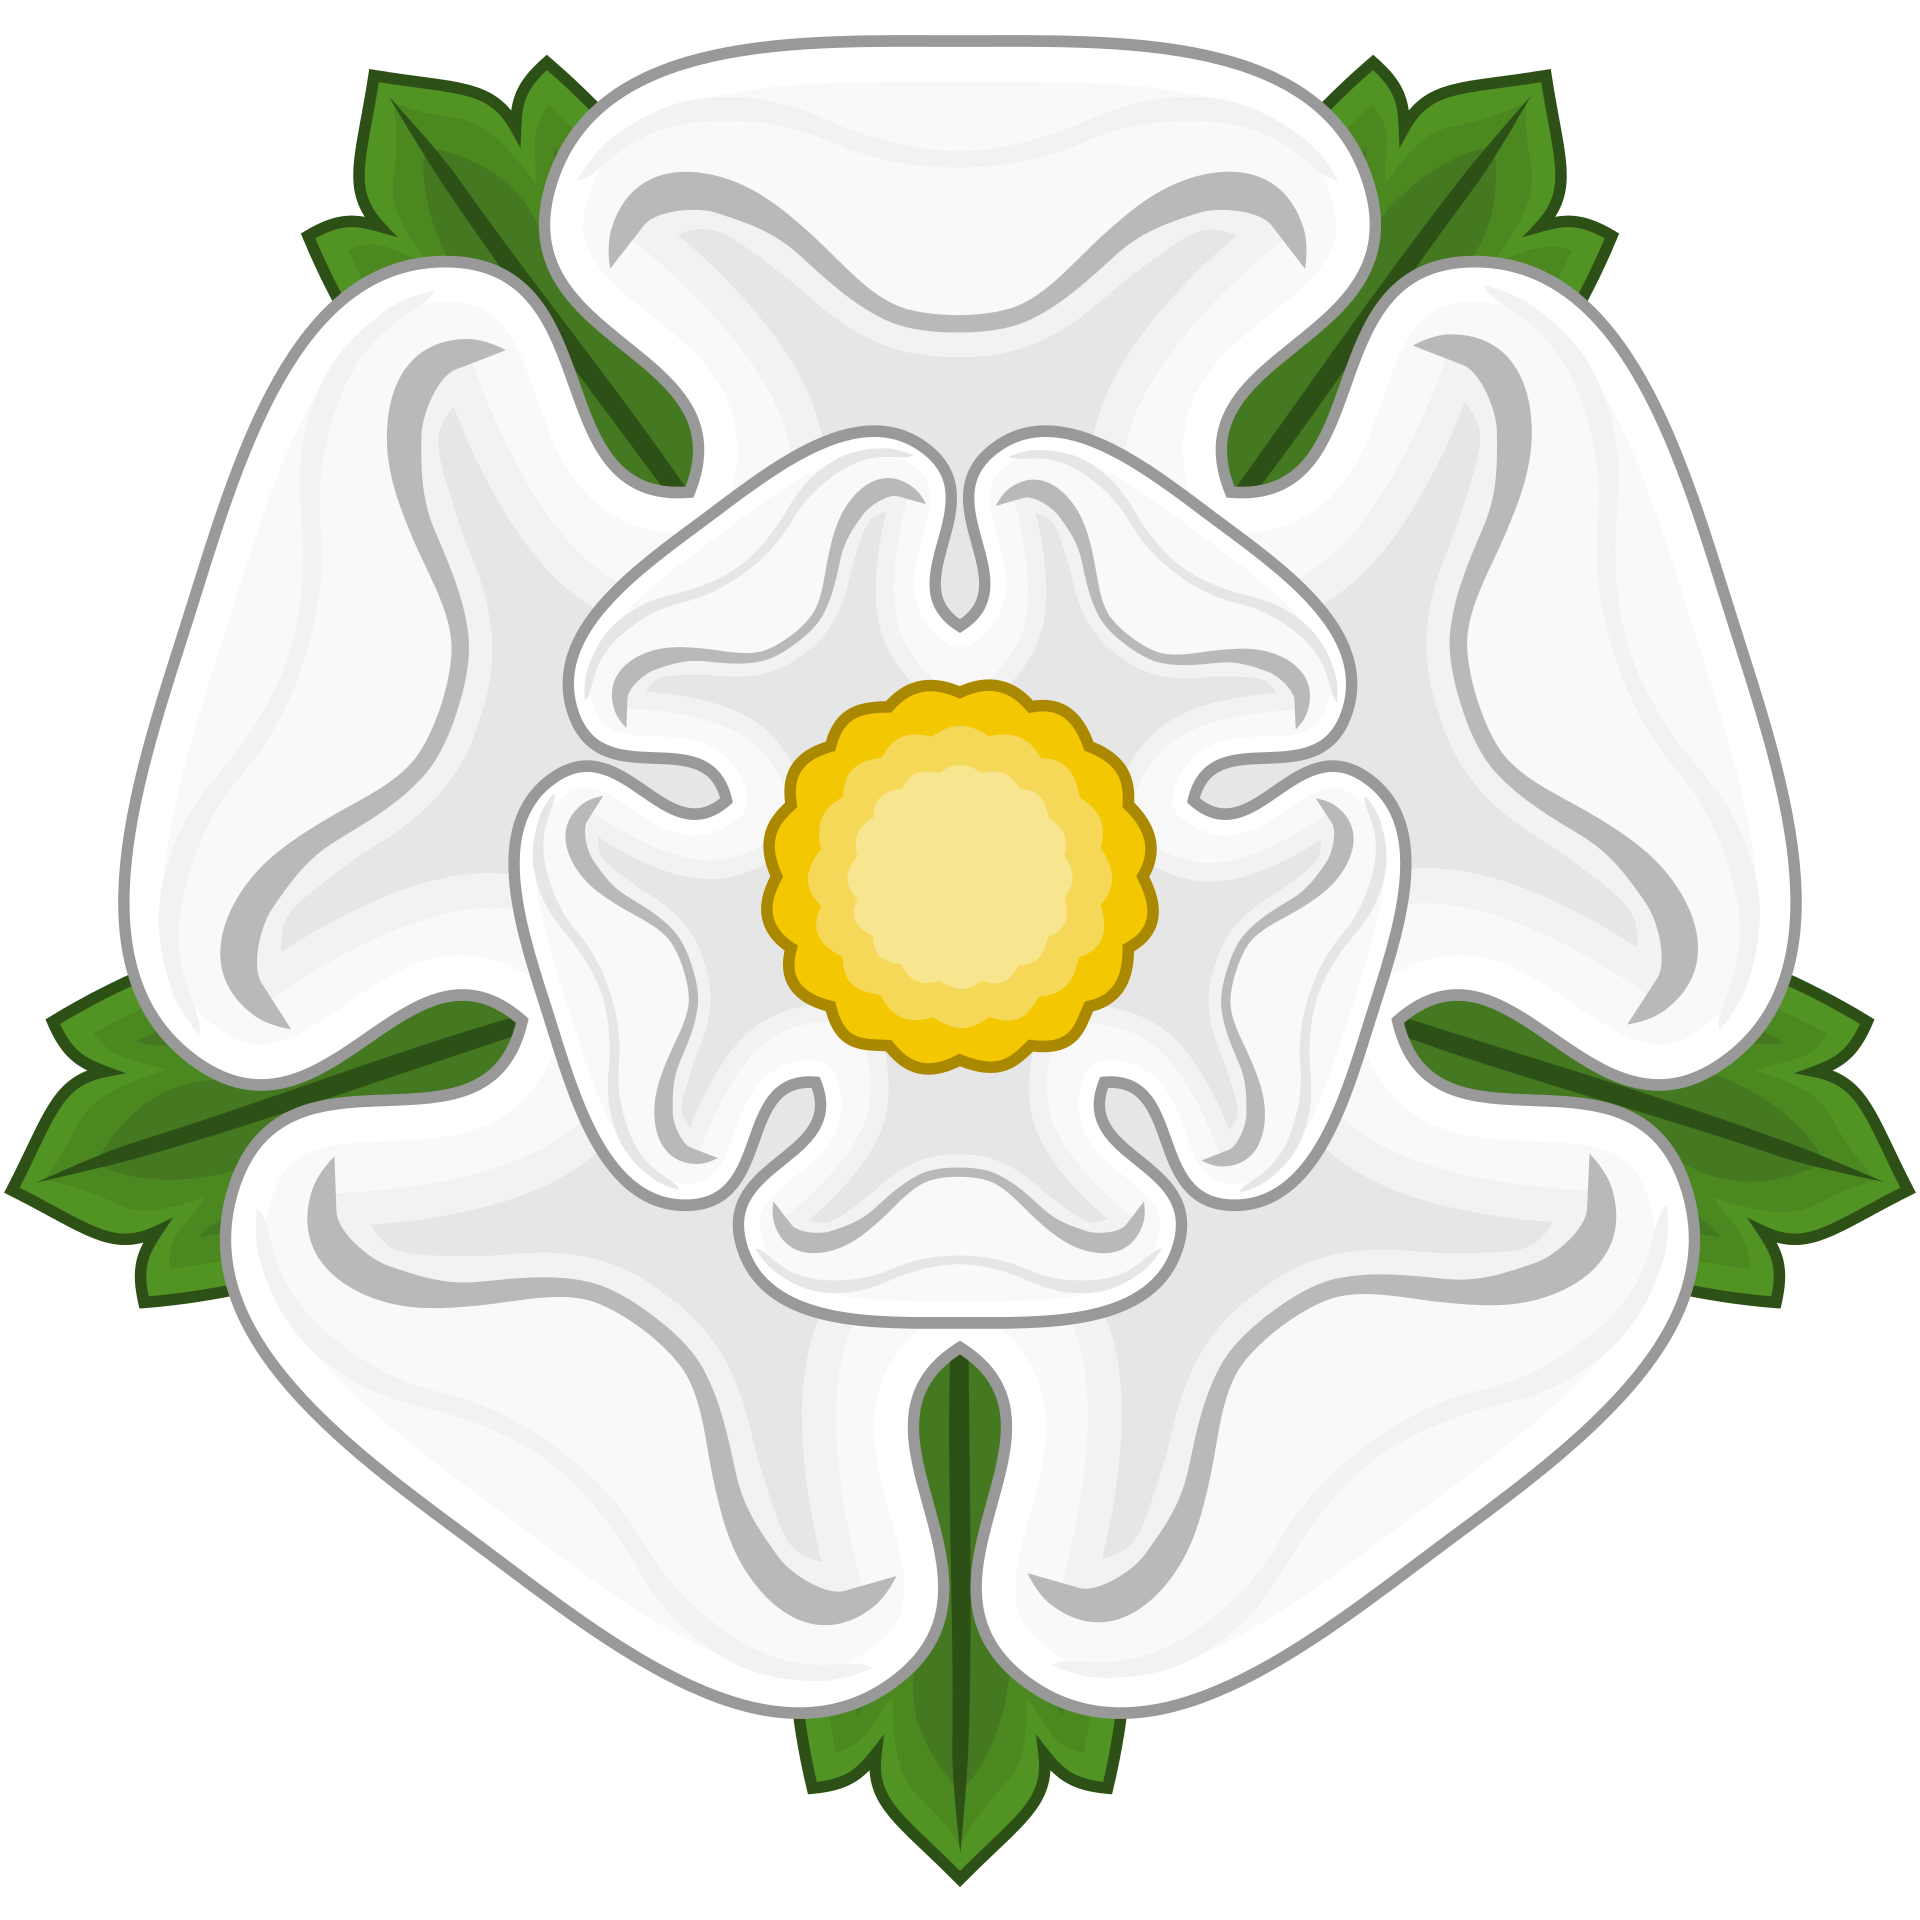 White Rose of York - Wikipedia